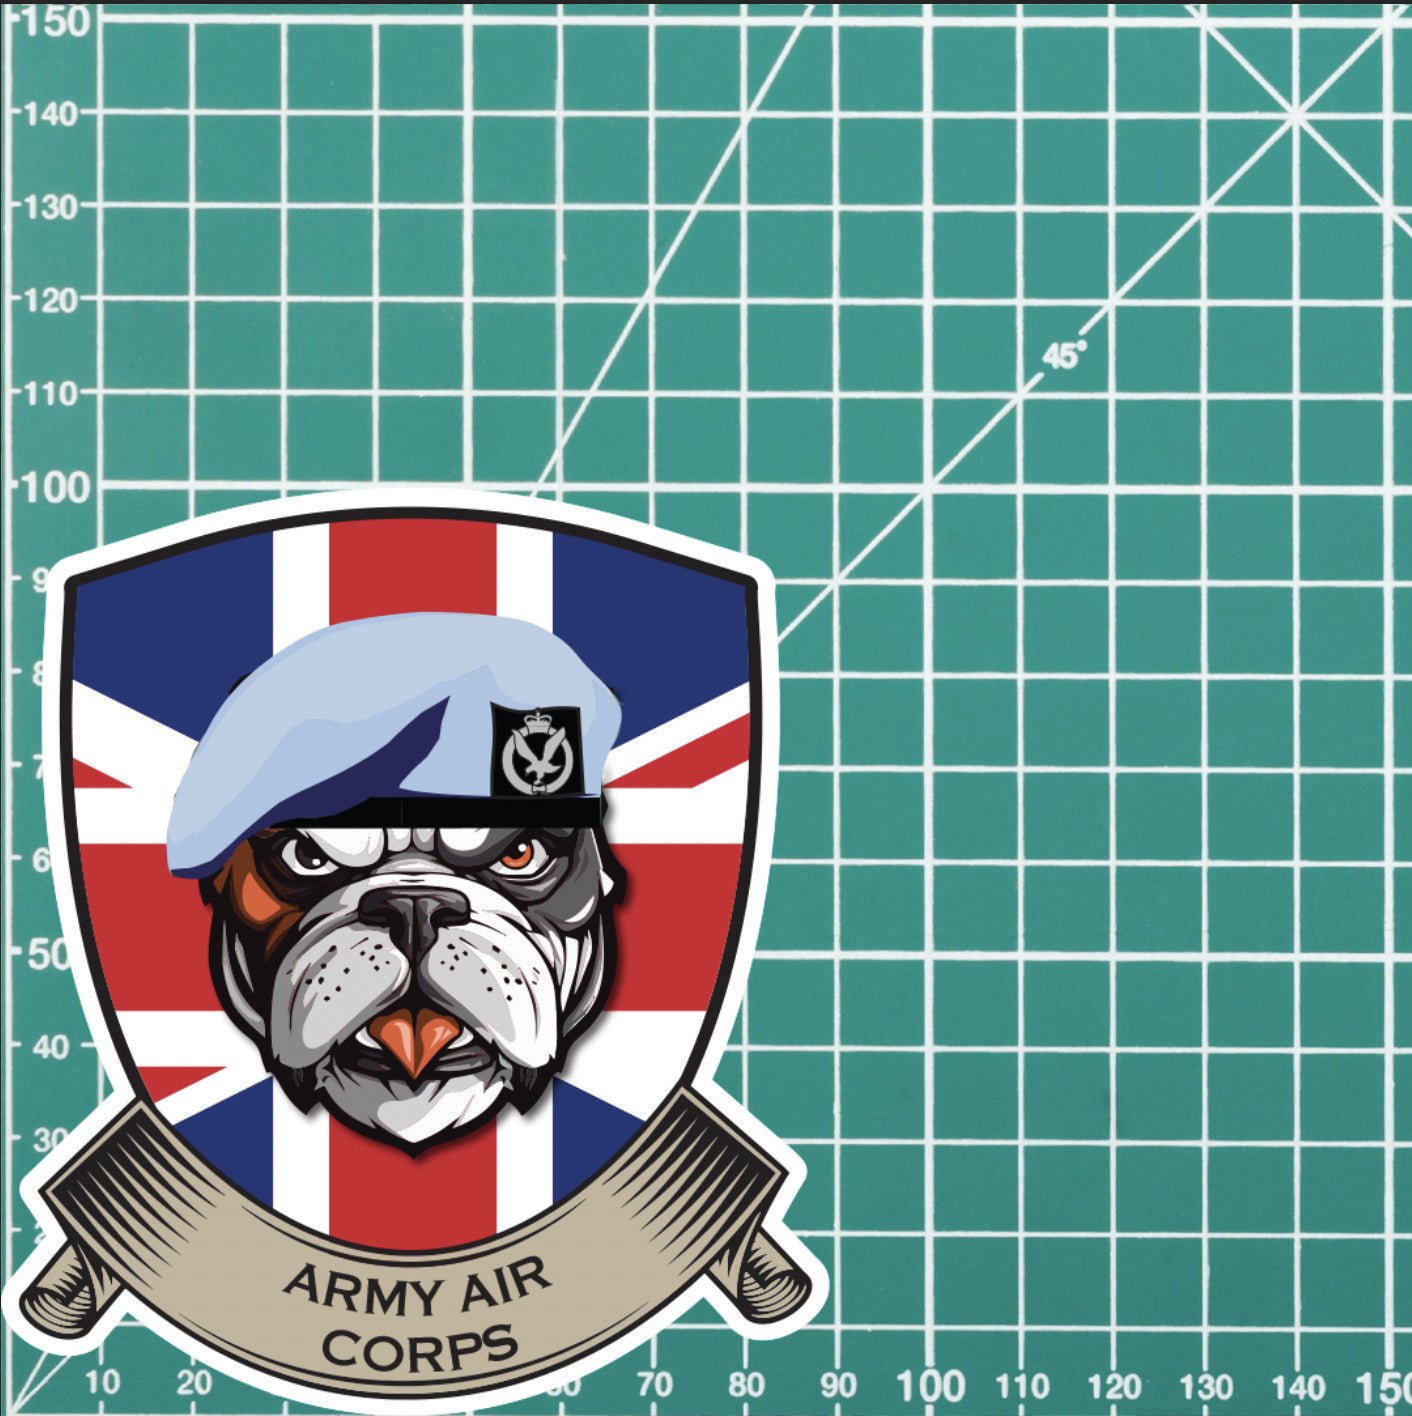 Army Air Corps British Bulldog and Union Jack Shield Vinyl Sticker - 10cm redplume